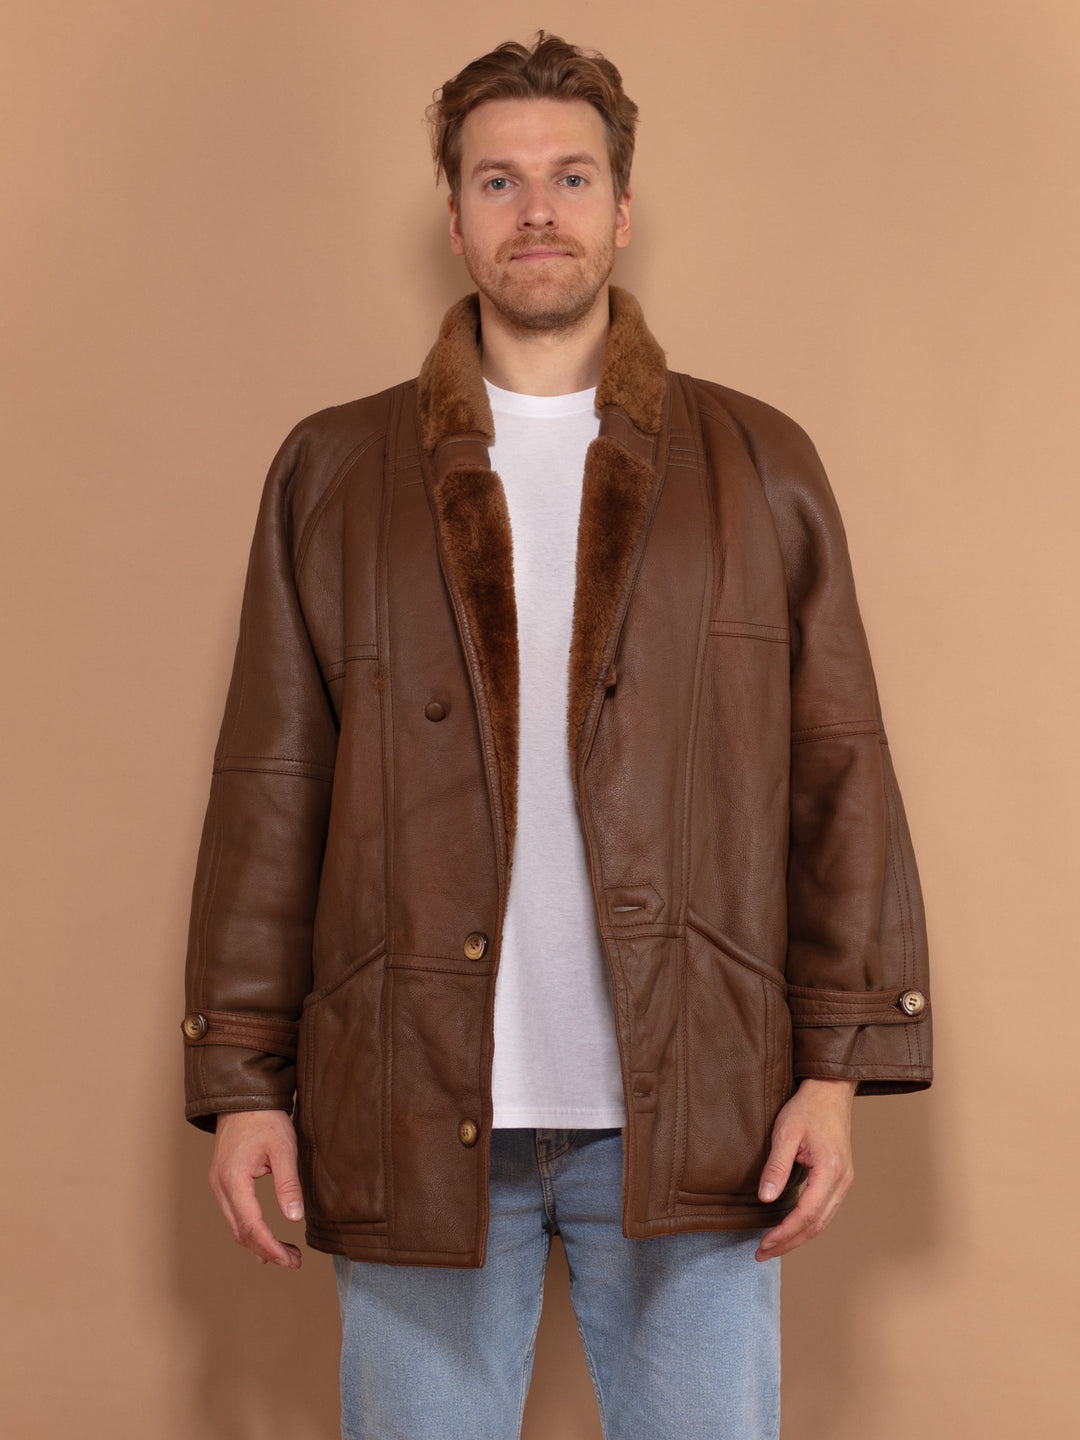 Brown Sheepskin Coat 70s, Size Large, Sheepskin Leather Coat, Button Up Winter Coat, Retro Outerwear, Vintage Fashion, Western Jacket